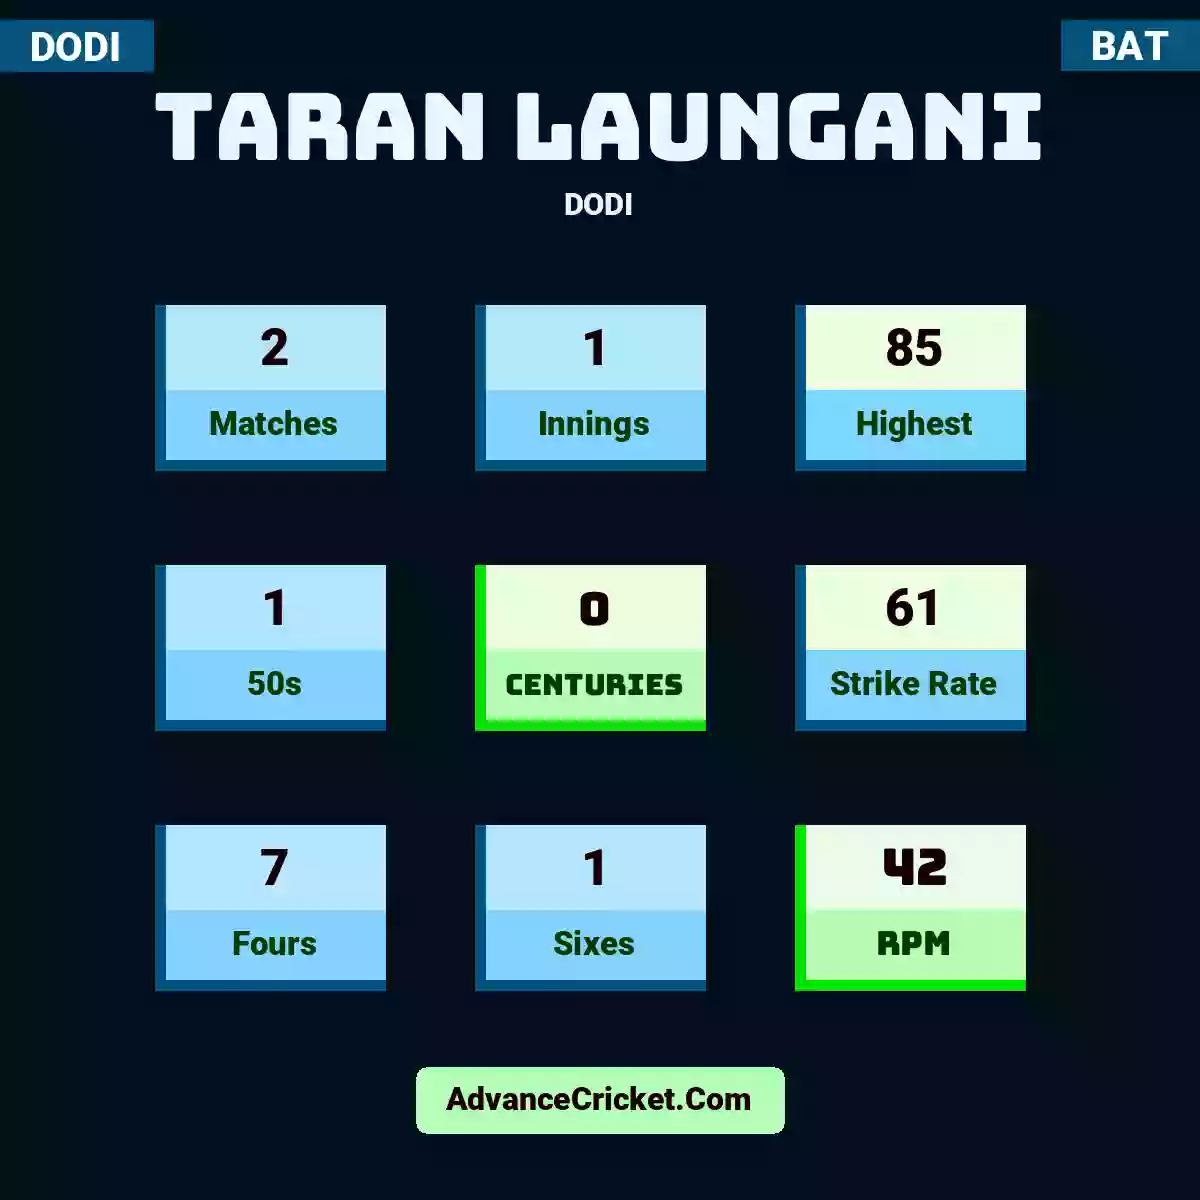 Taran Laungani DODI , Taran Laungani played 2 matches, scored 85 runs as highest, 1 half-centuries, and 0 centuries, with a strike rate of 61. T.Laungani hit 7 fours and 1 sixes, with an RPM of 42.